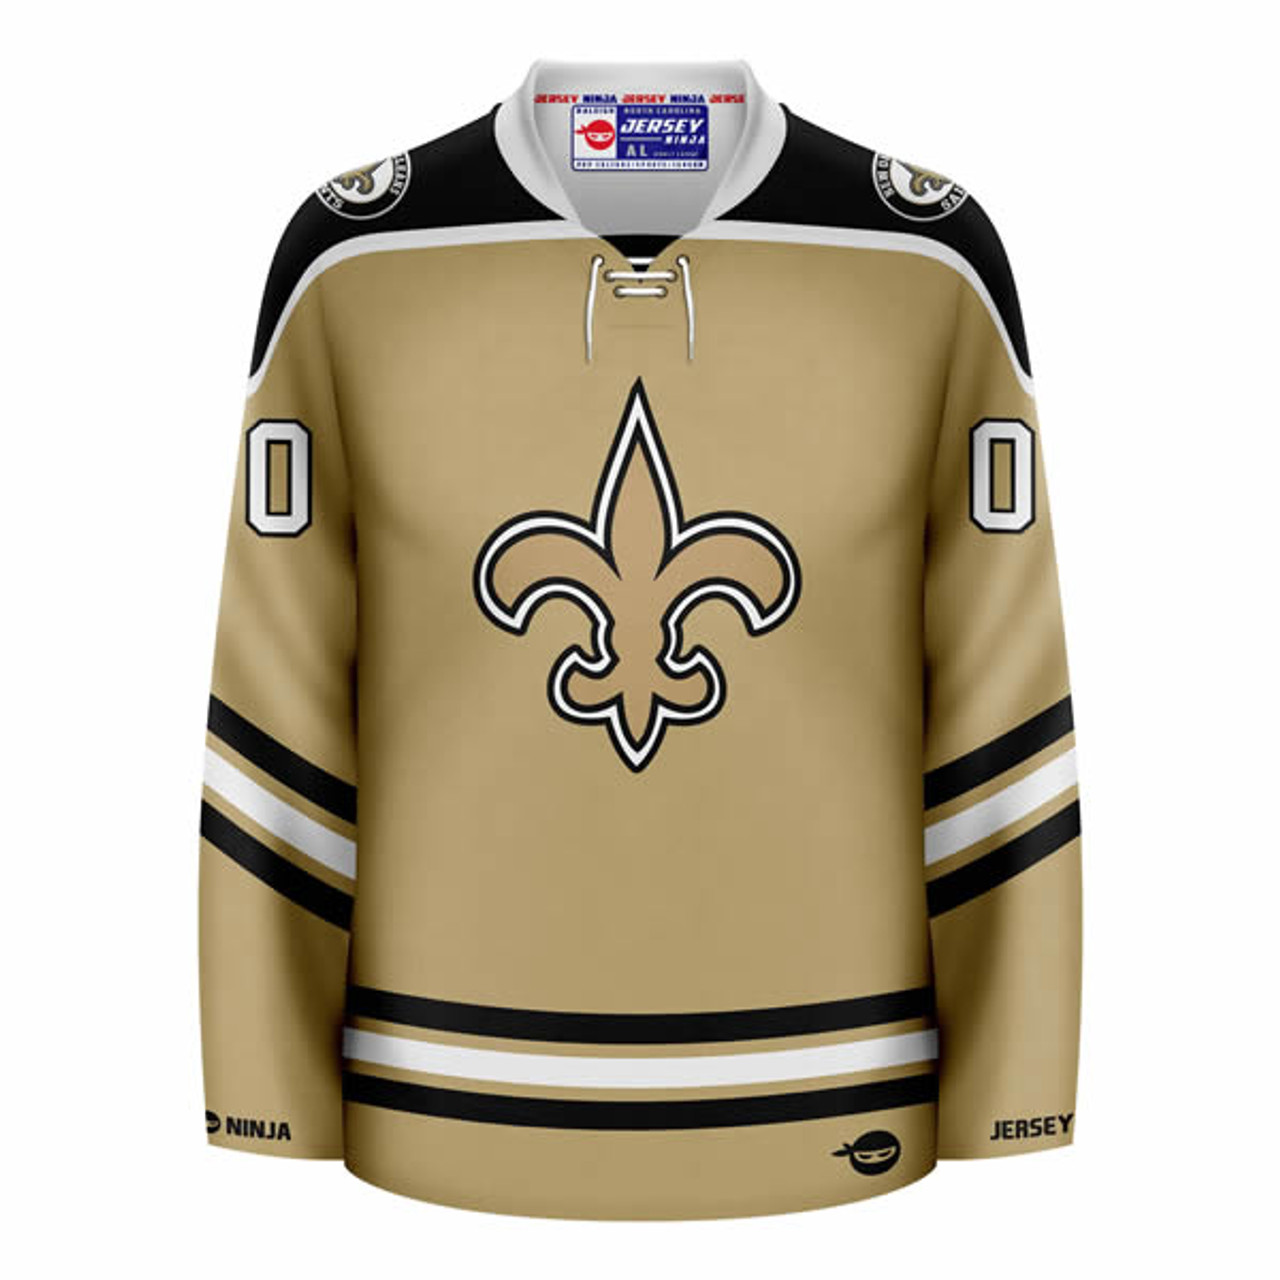 New Orleans Brass ECHL Hockey Jersey, size XL Purple/Black/Gold